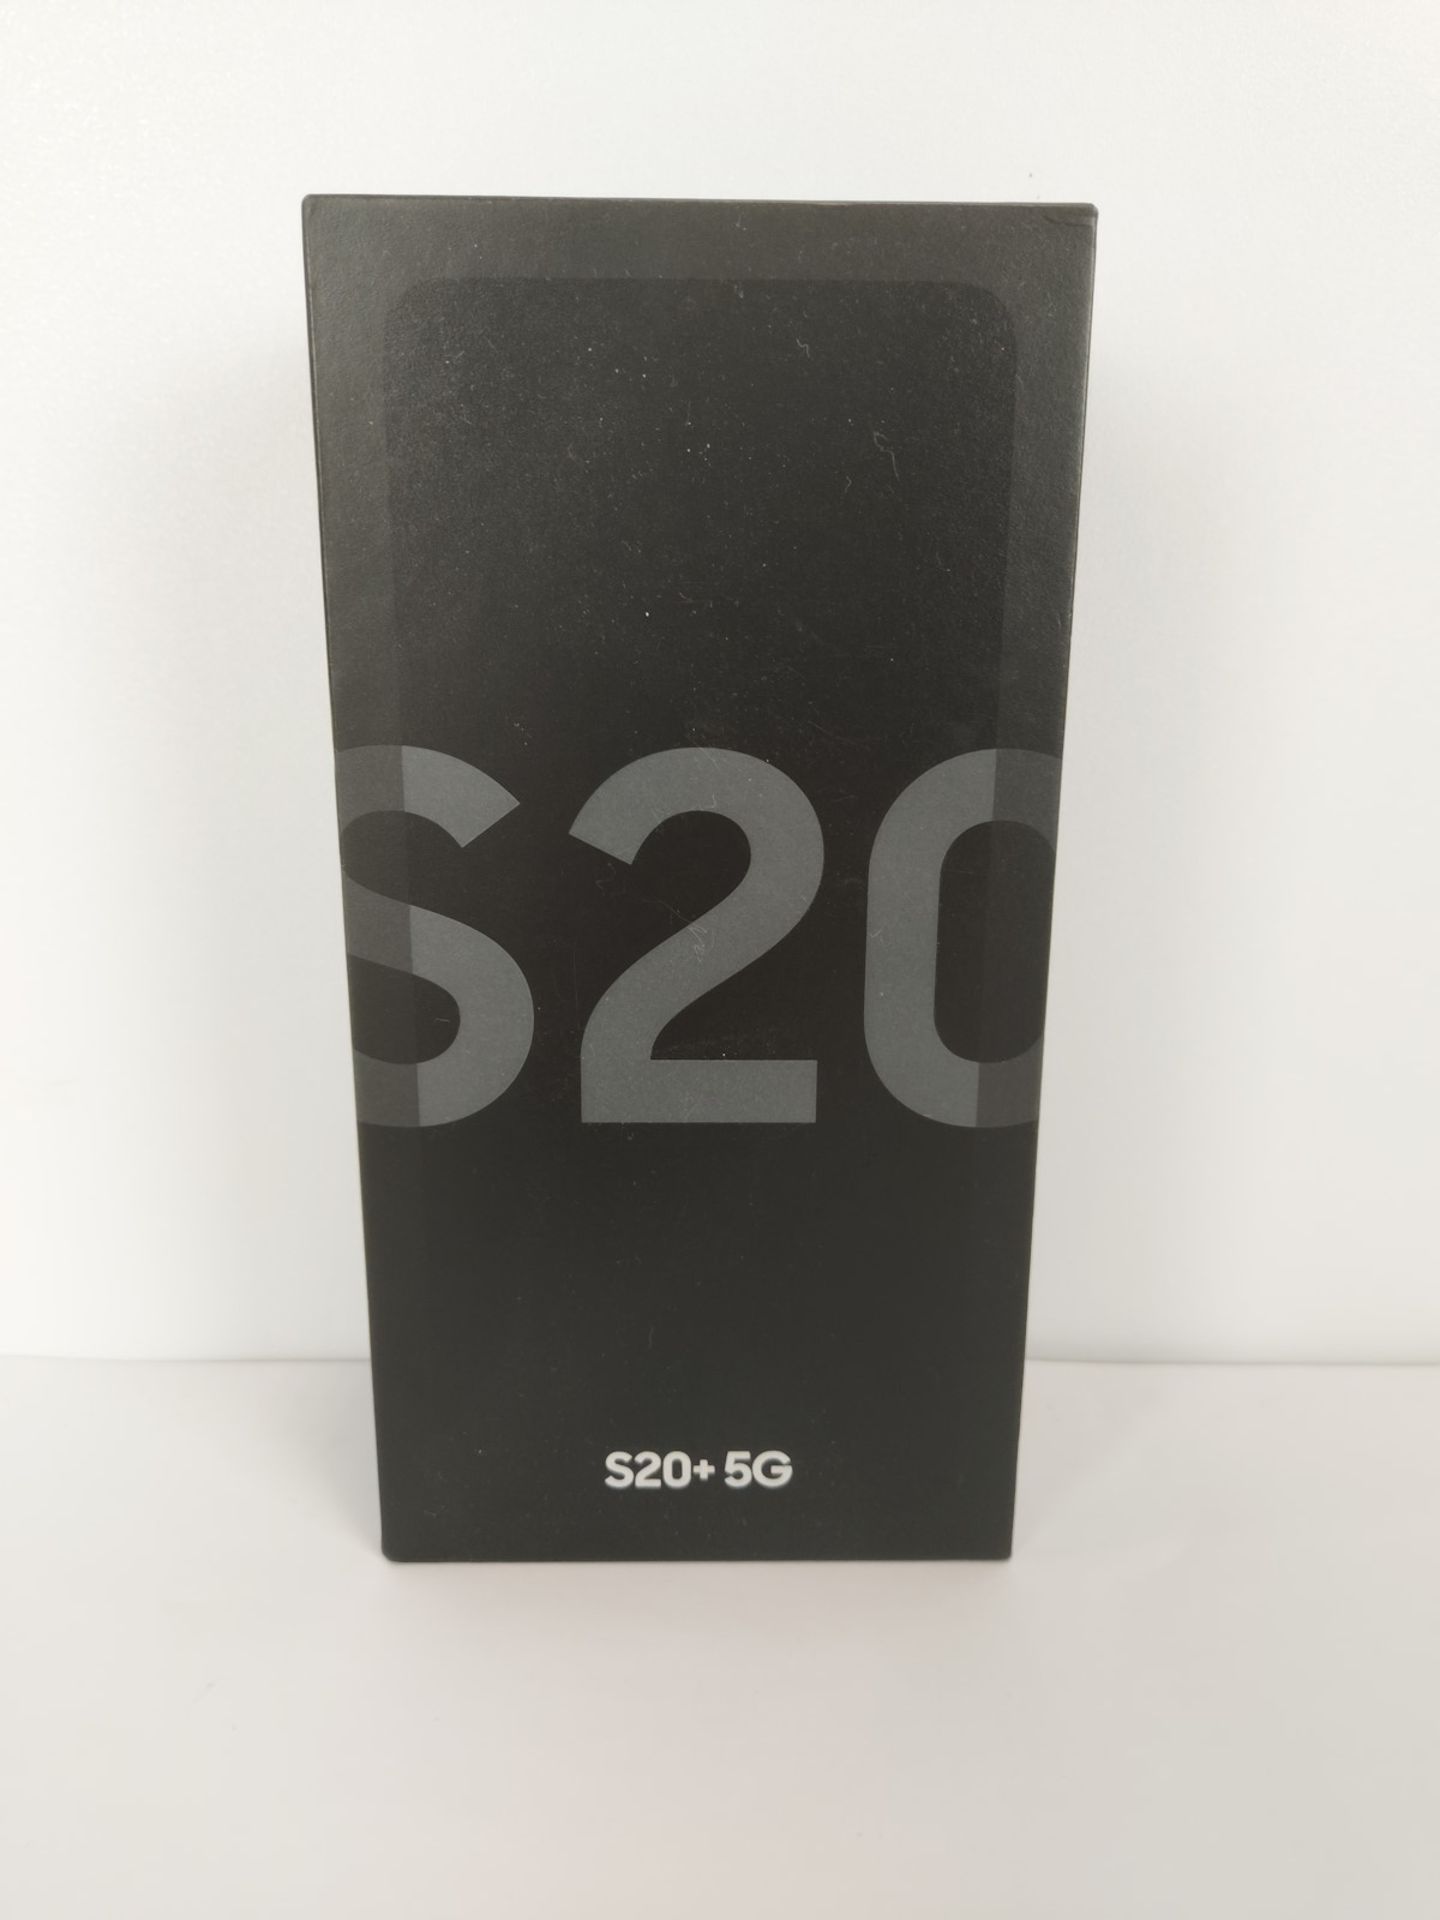 Samsung Galaxy S20 Plus 5G G986B/Dual-Sim, 128GB RAM, Cosmic Grey - Image 4 of 4